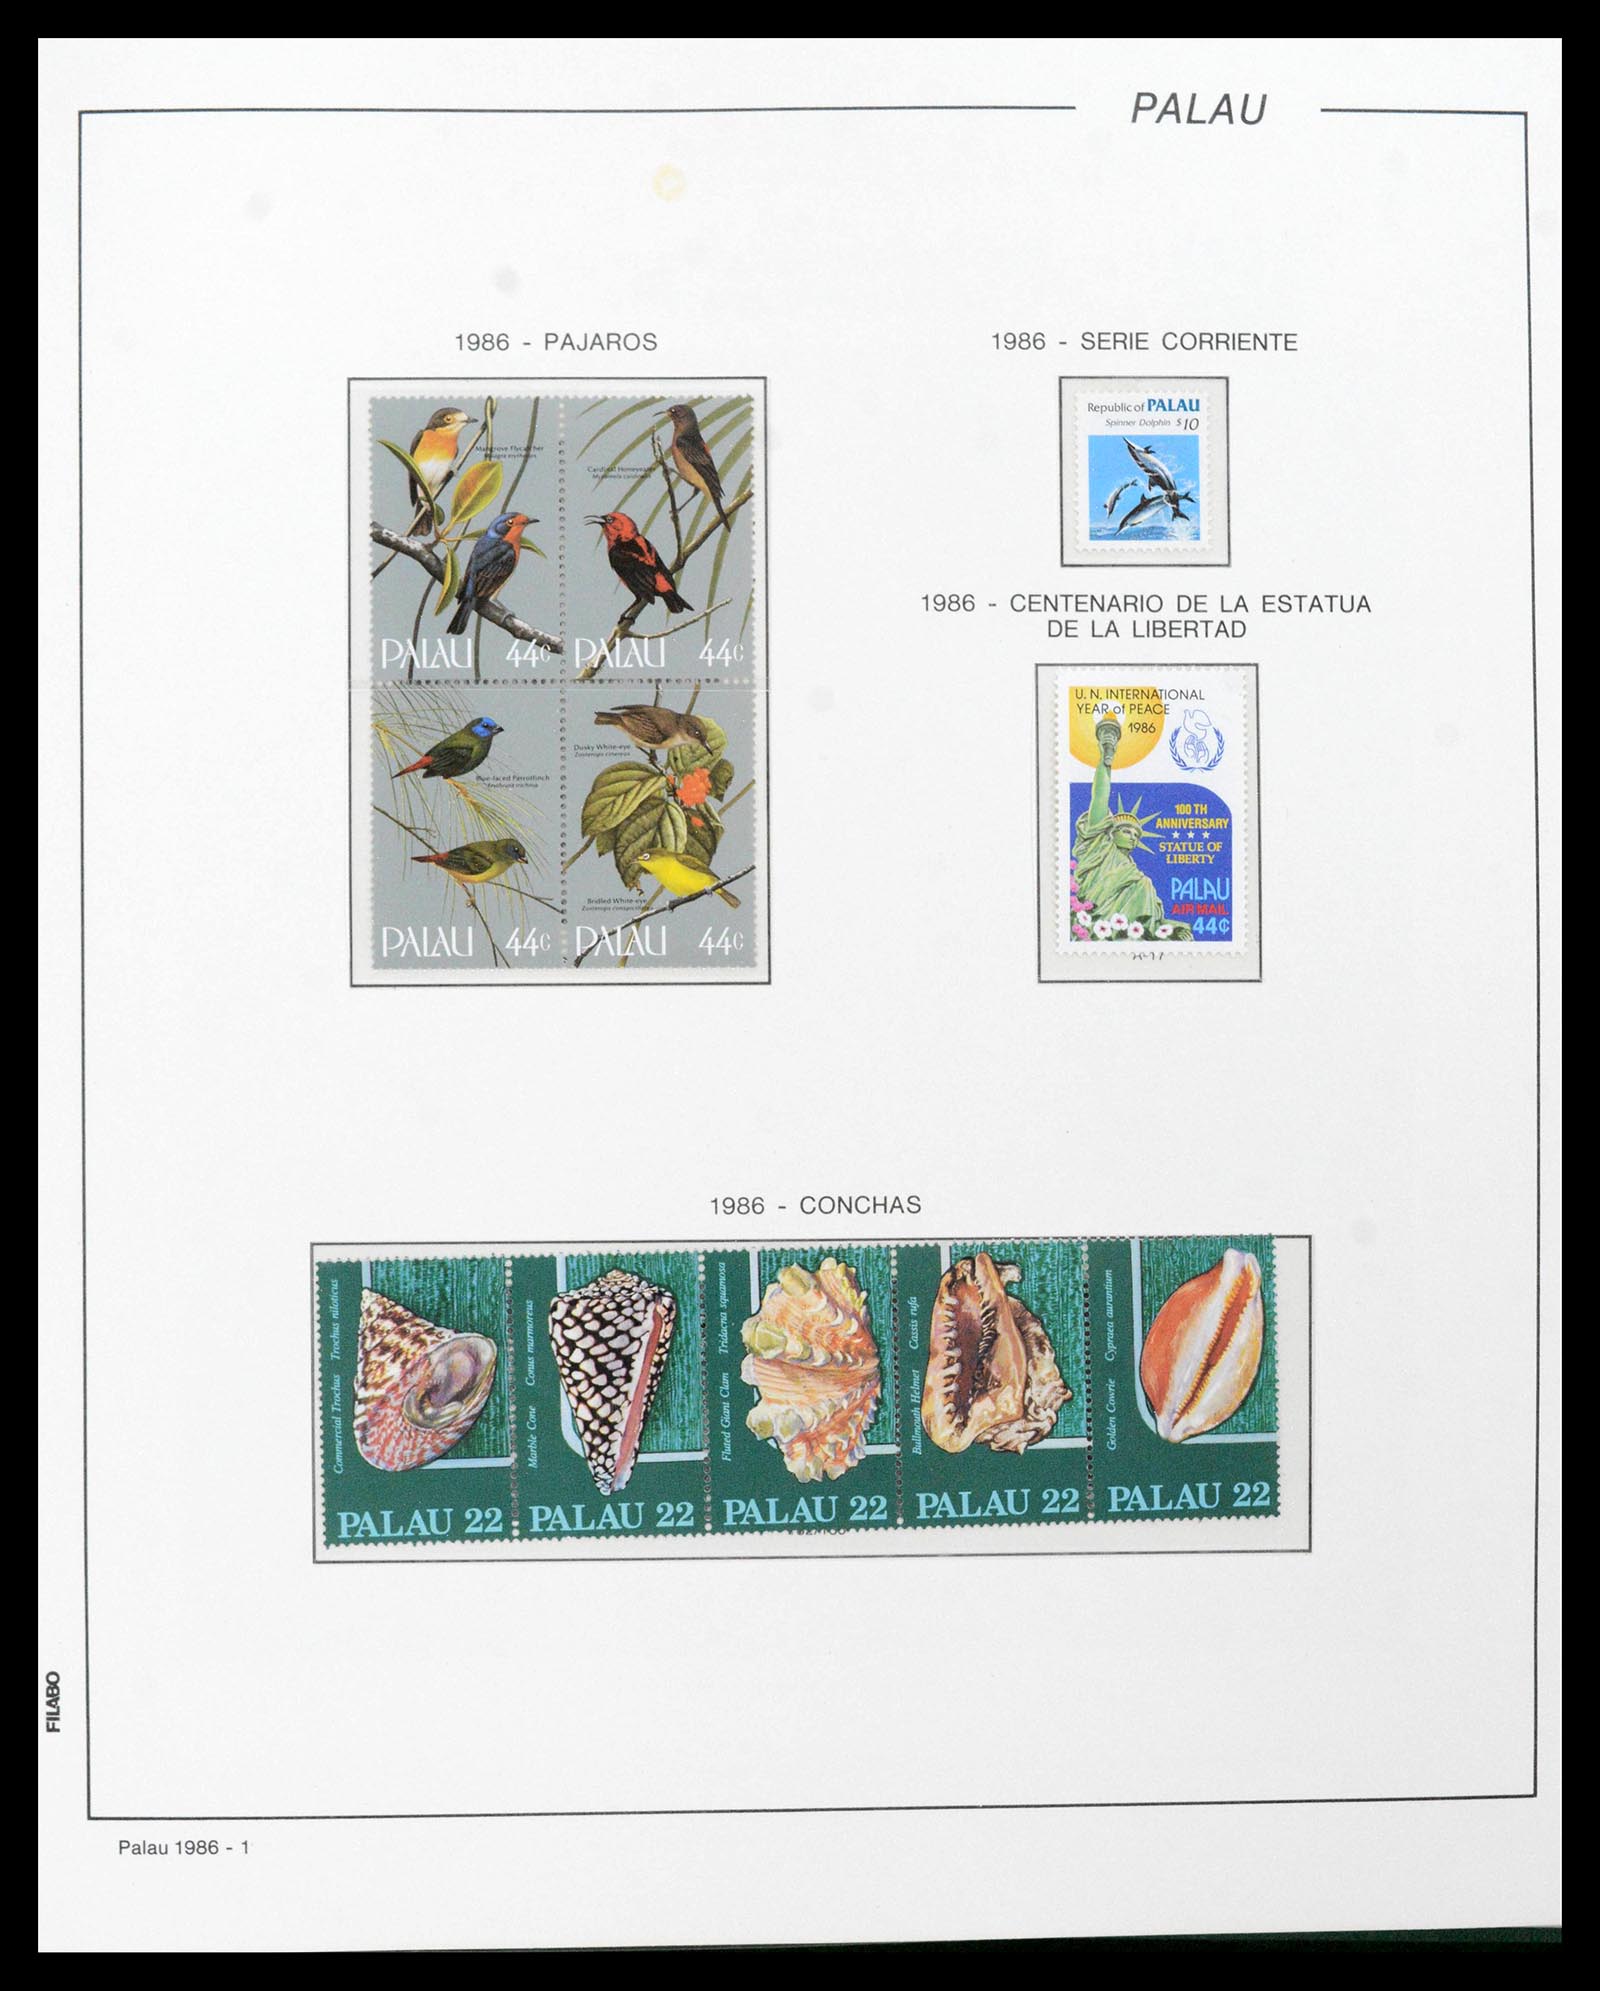 39222 0010 - Stamp collection 39222 Palau, Micronesia and Marshall islands 1980-1995.